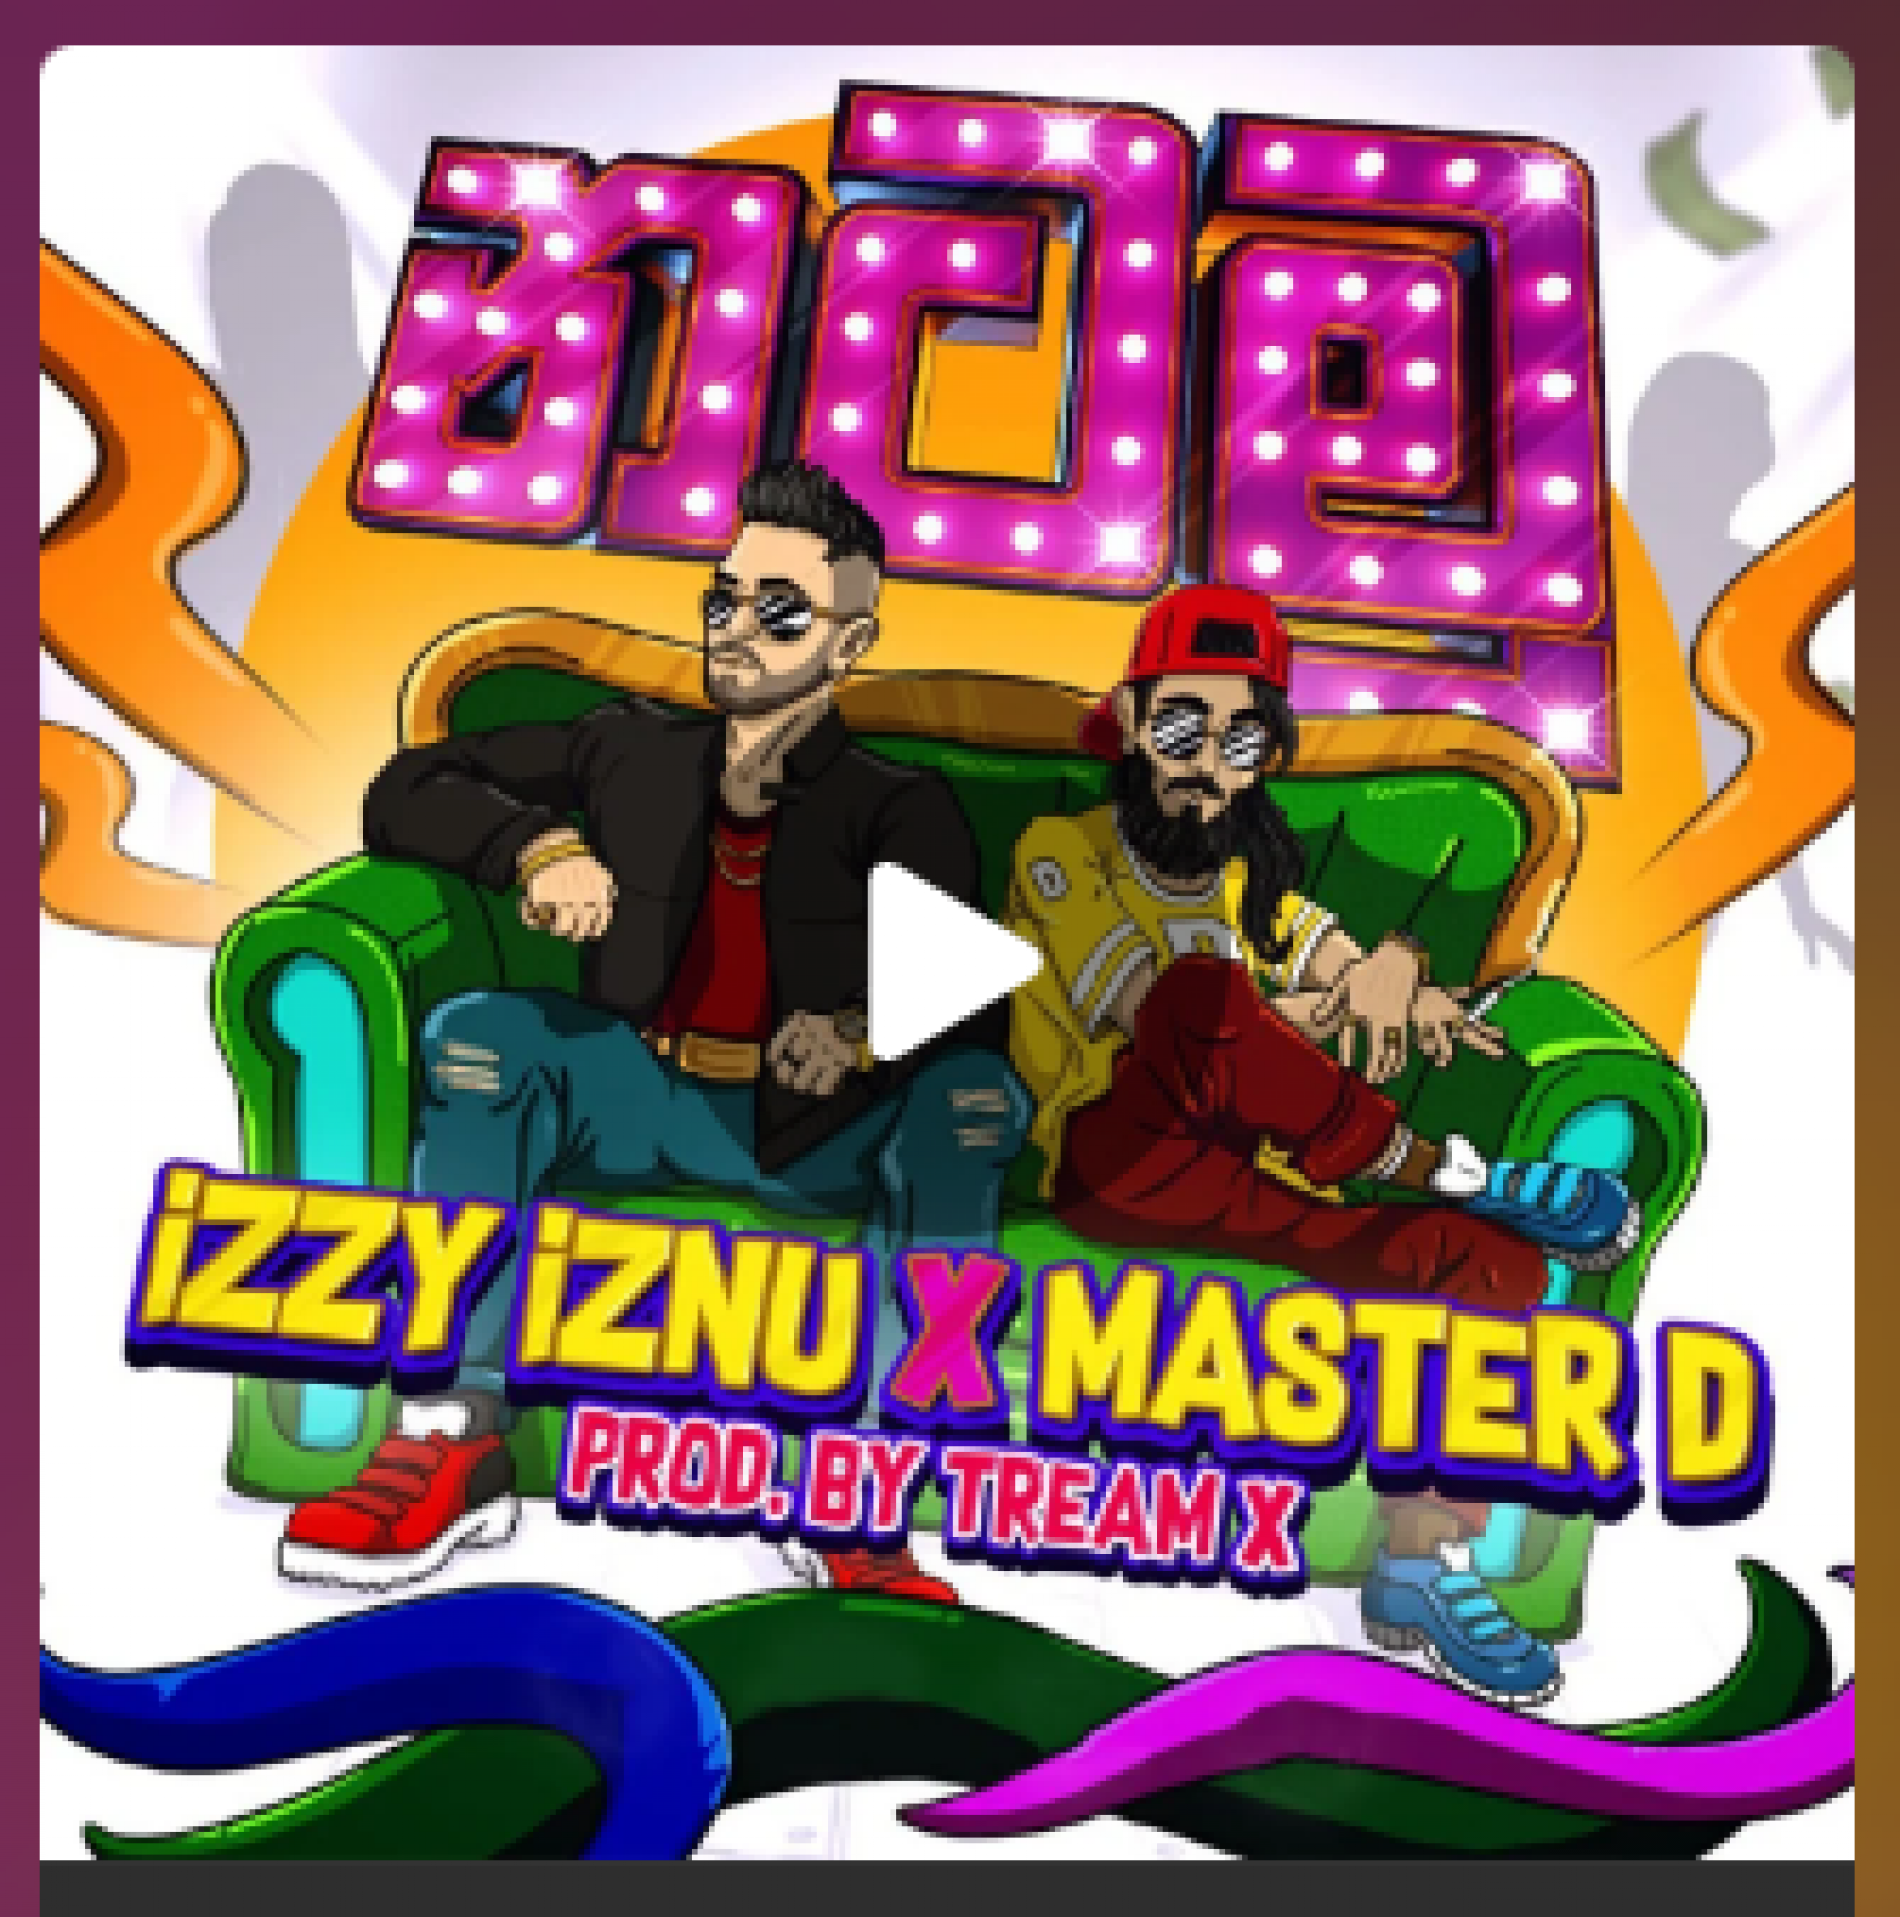 New Music : Izzy Iznu x Master D – Natamu